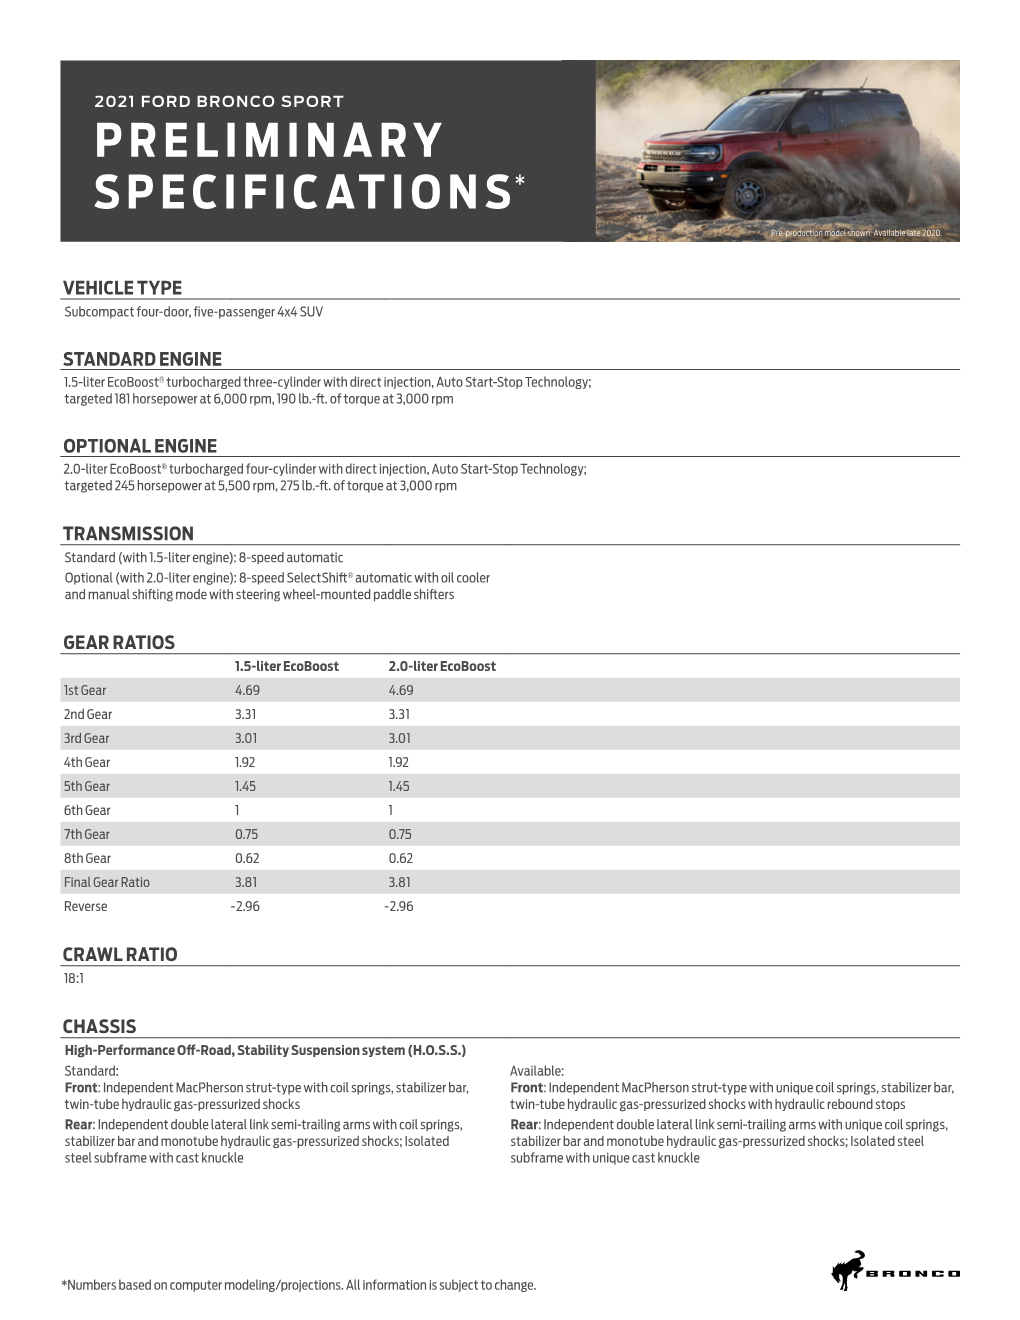 2021 Bronco Sport Preliminary Specs